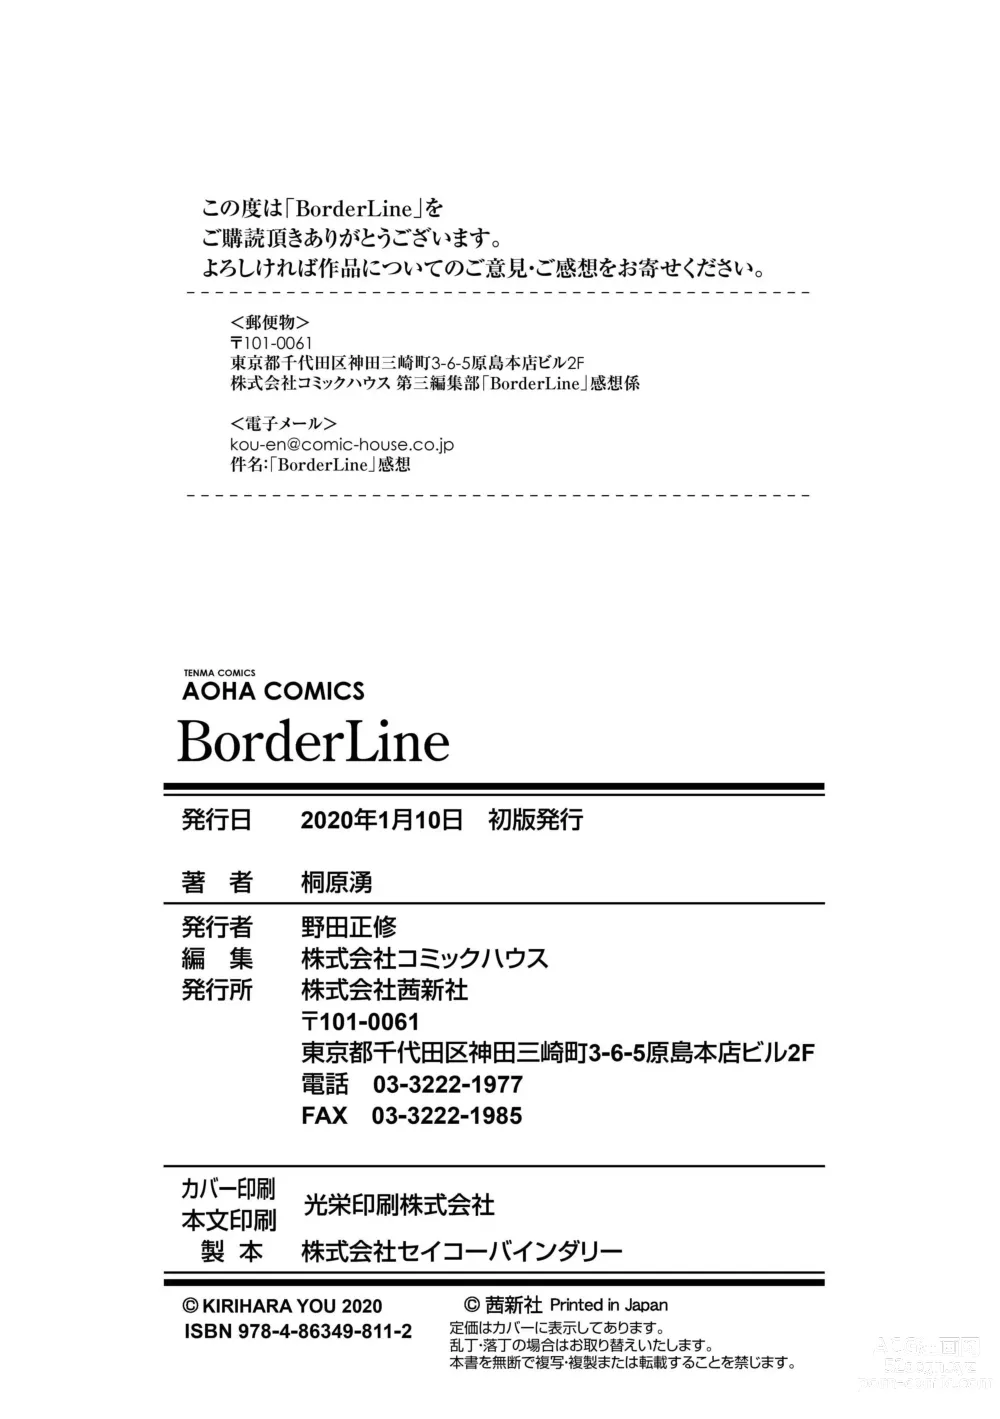 Page 178 of manga BorderLine